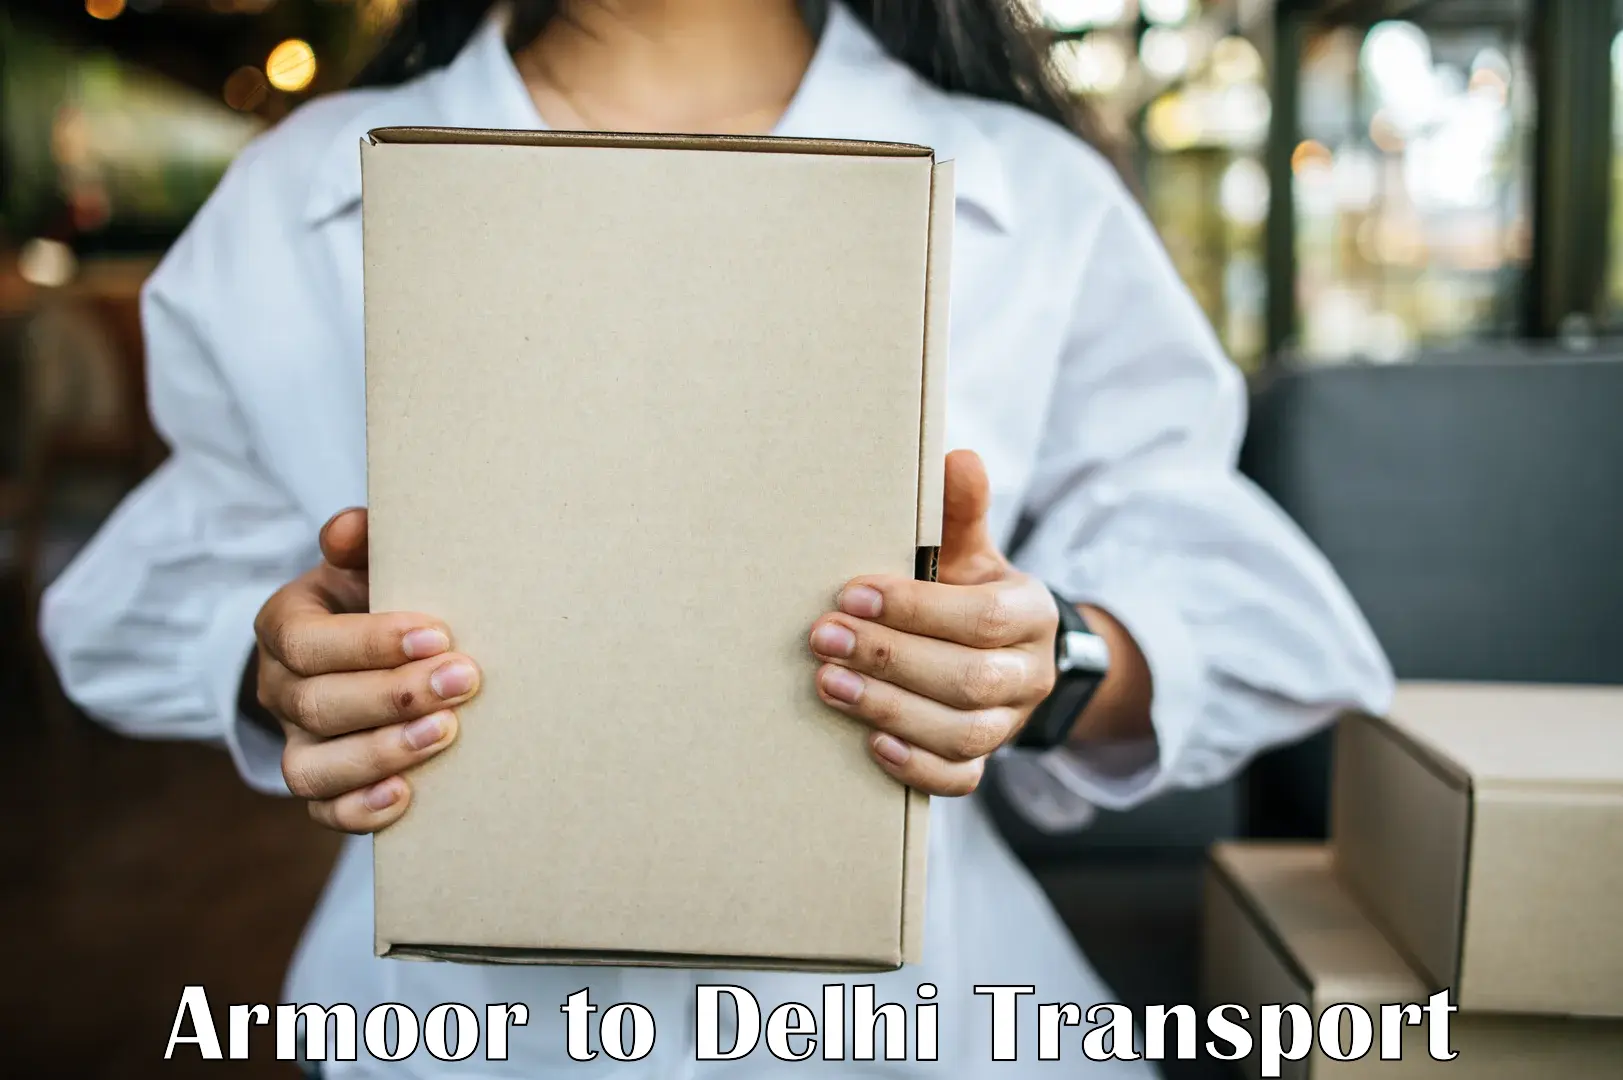 Commercial transport service Armoor to Delhi